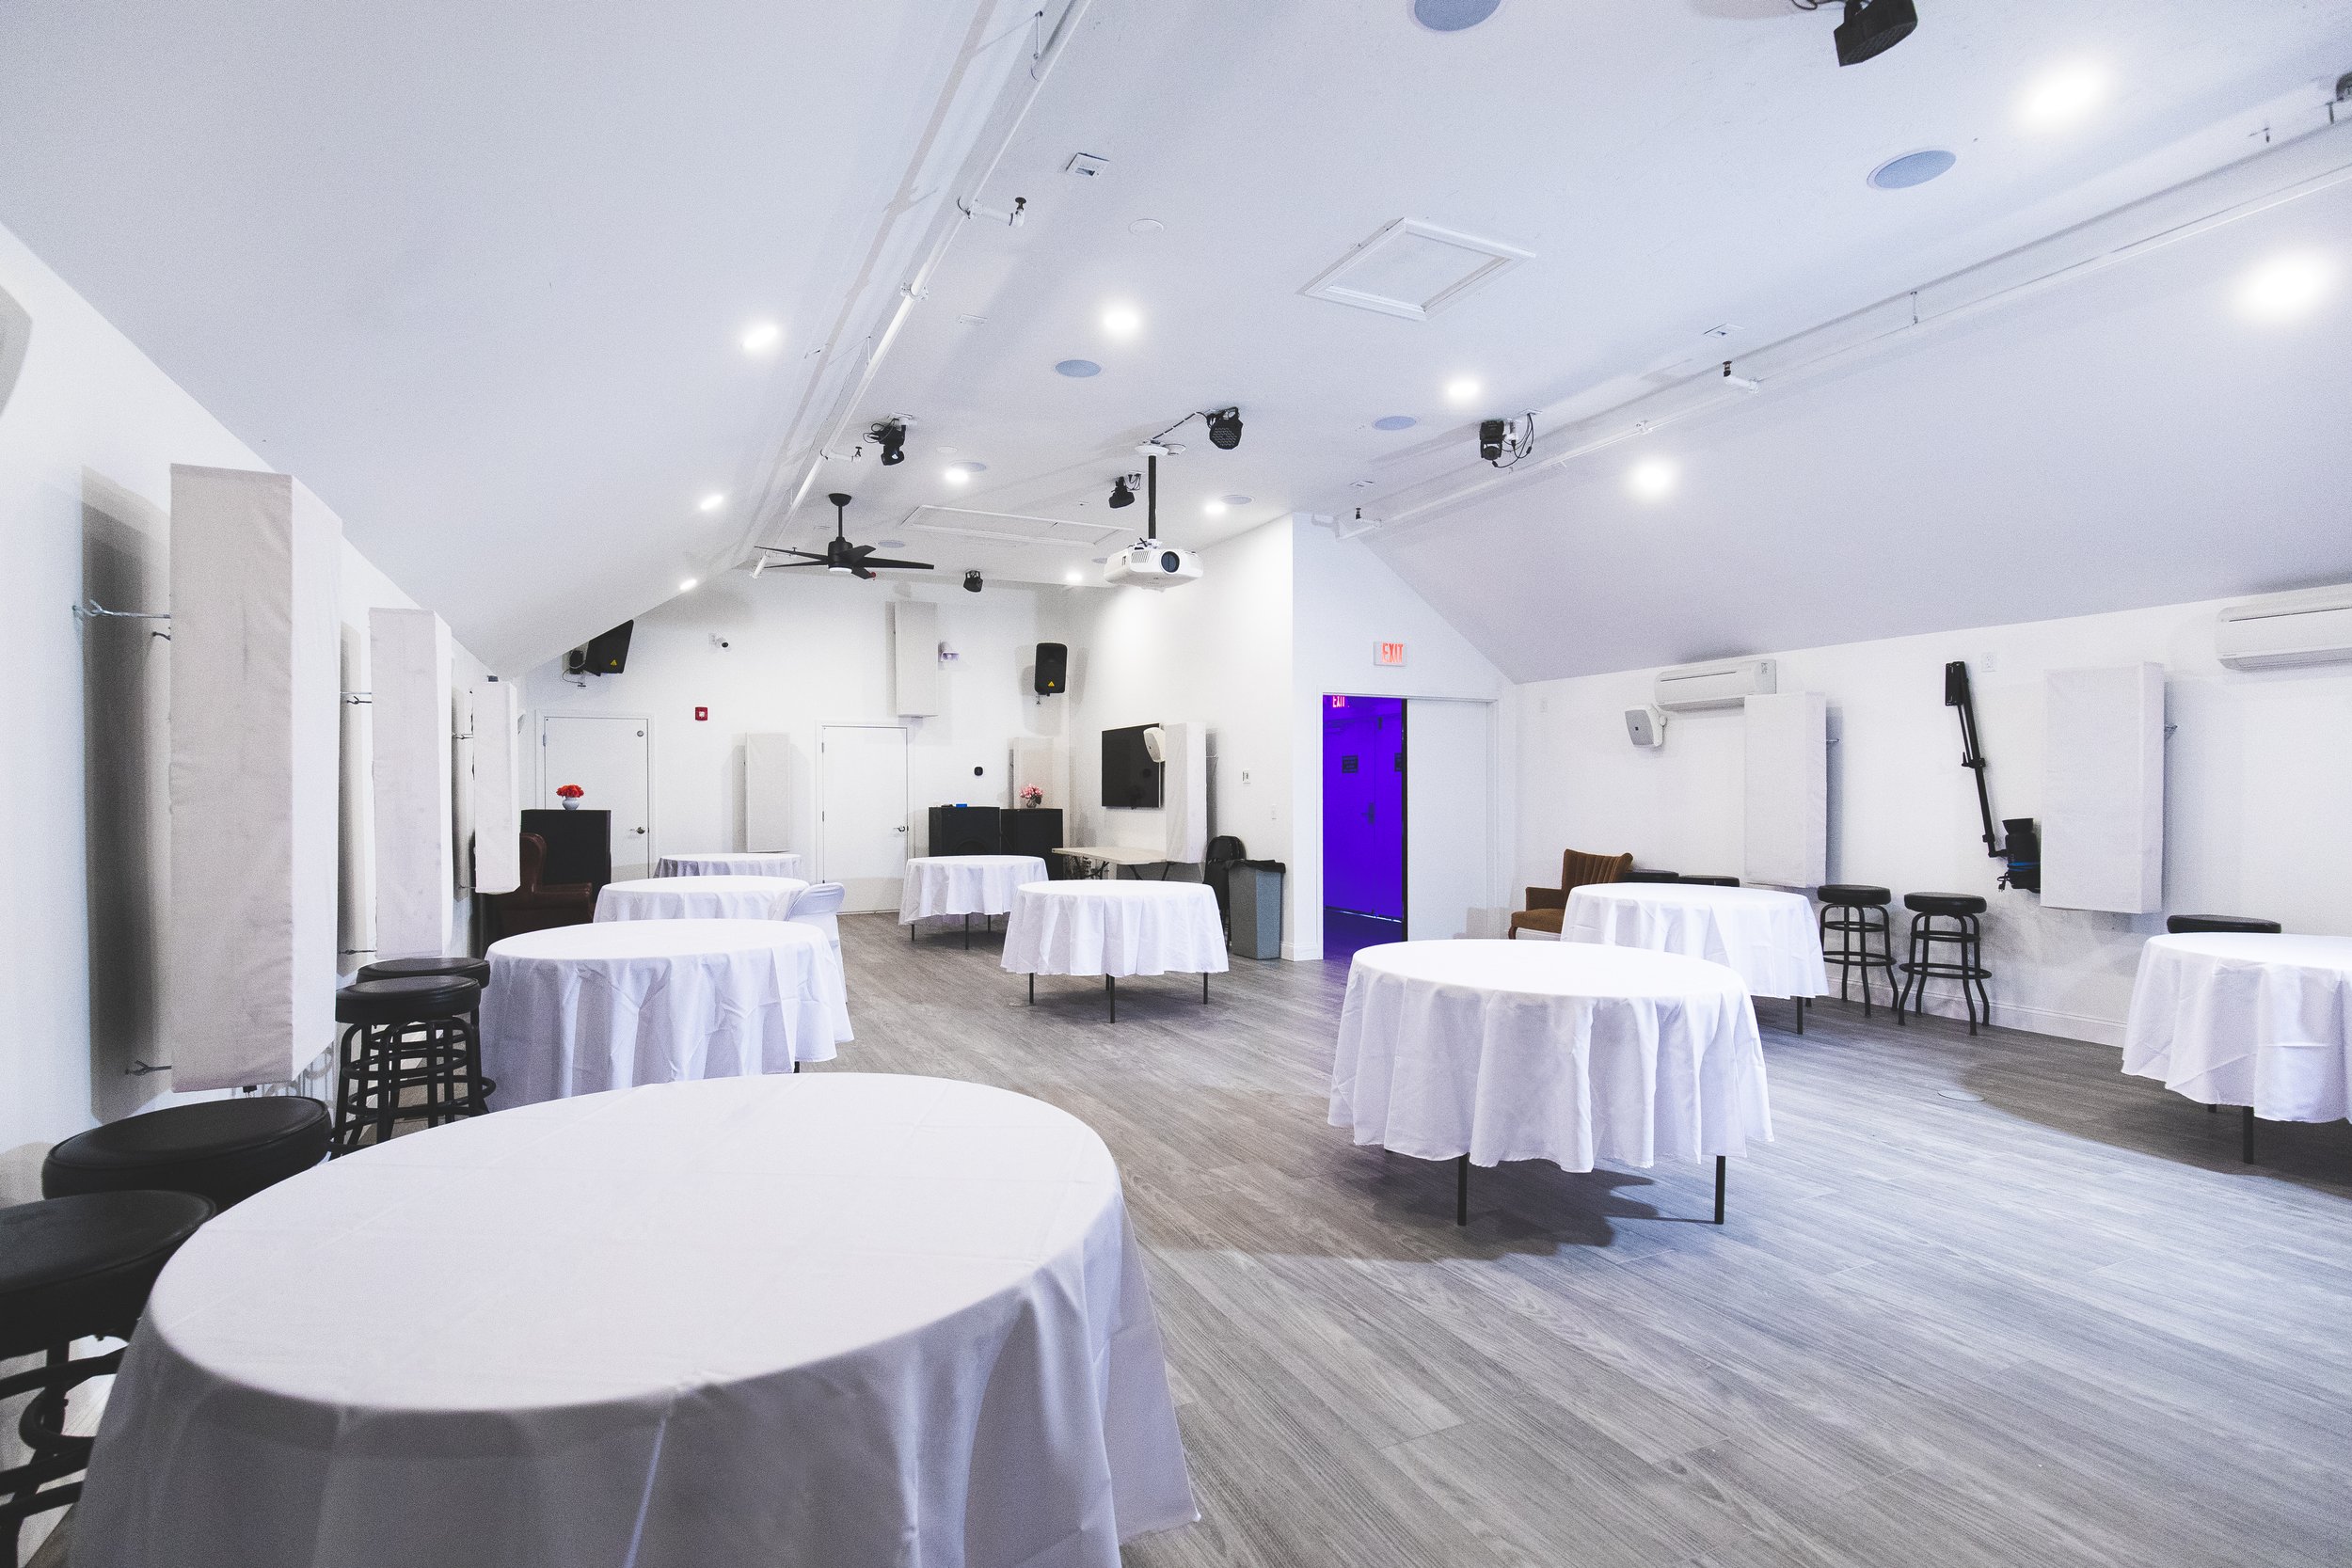 076A6237-Boston Studio Rental+Function Hall Venue Facility Large Room+Birthday Parties - Bat Mitzvah.jpg